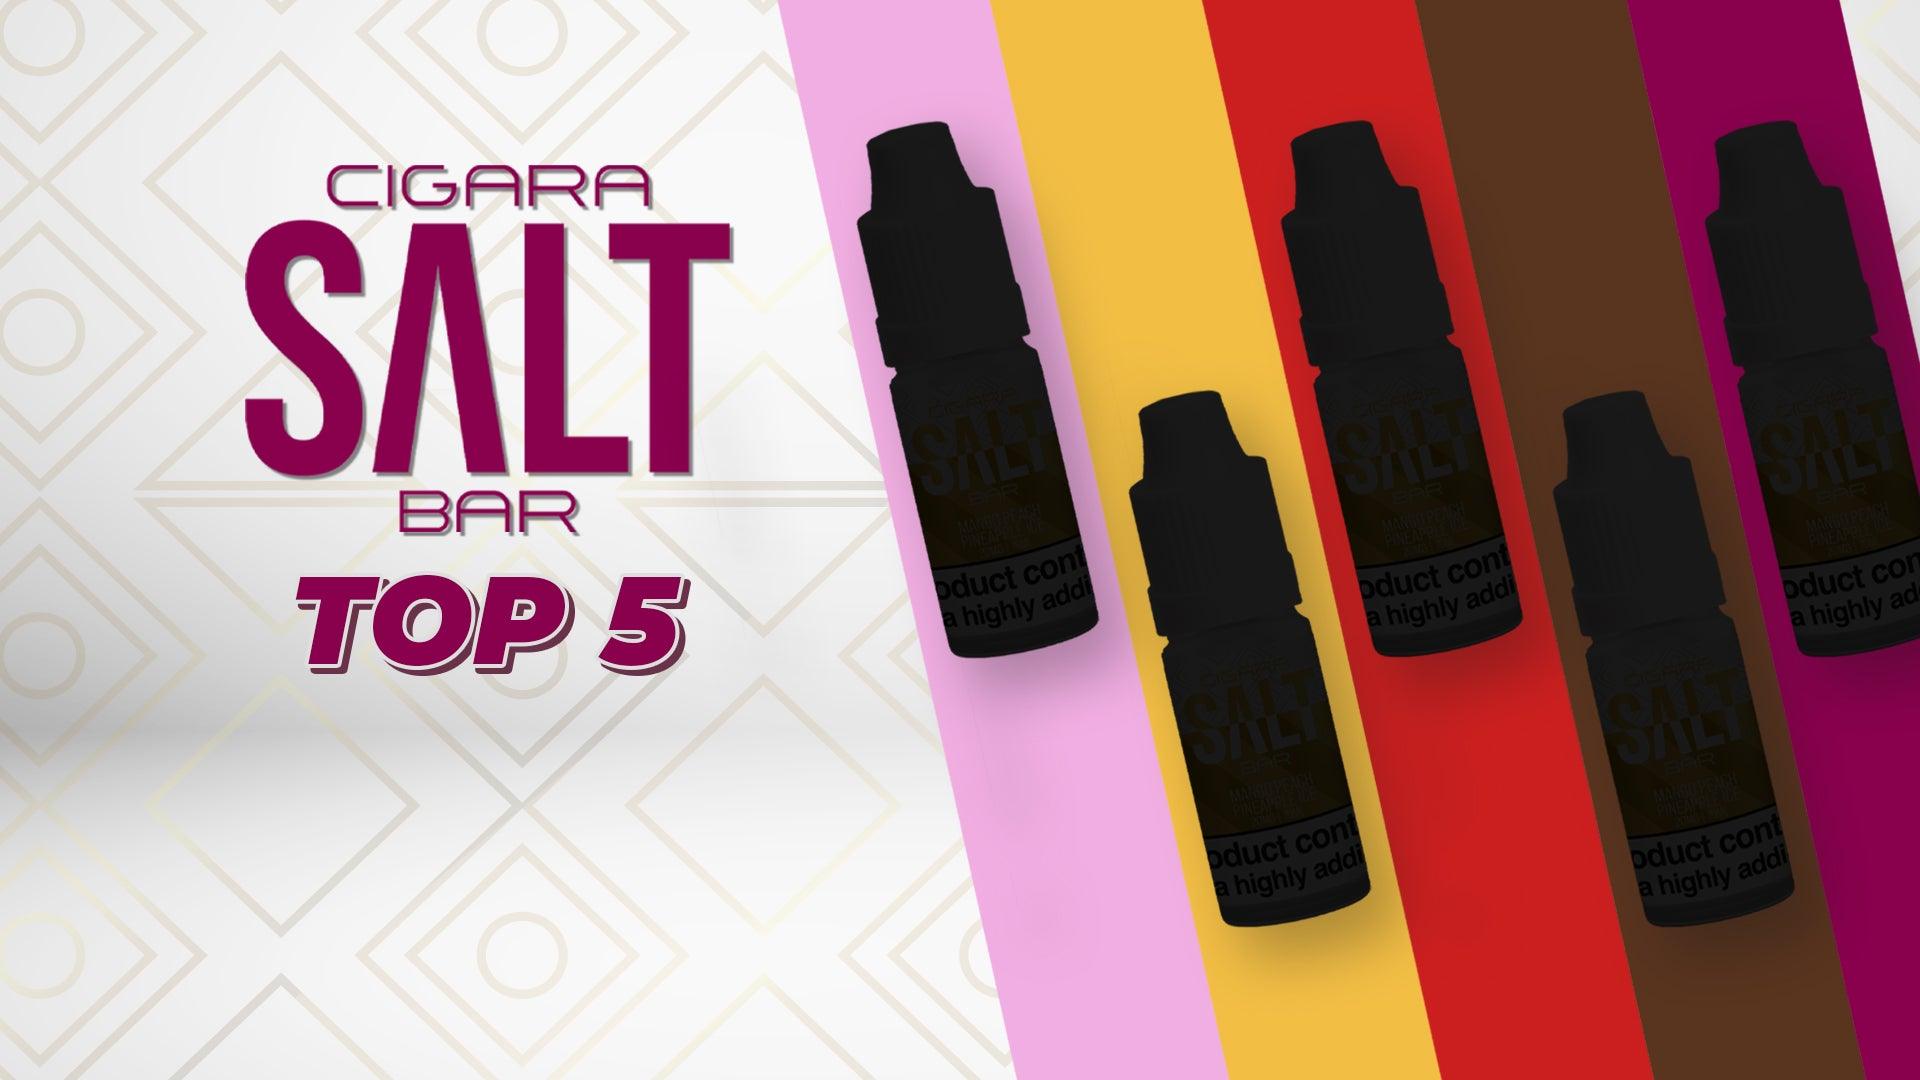 Top 5 Cigara Salt Bar Nic Salts - Brand:Cigara Salt Bar, Category:E-Liquids, Sub Category:Nicotine Salts